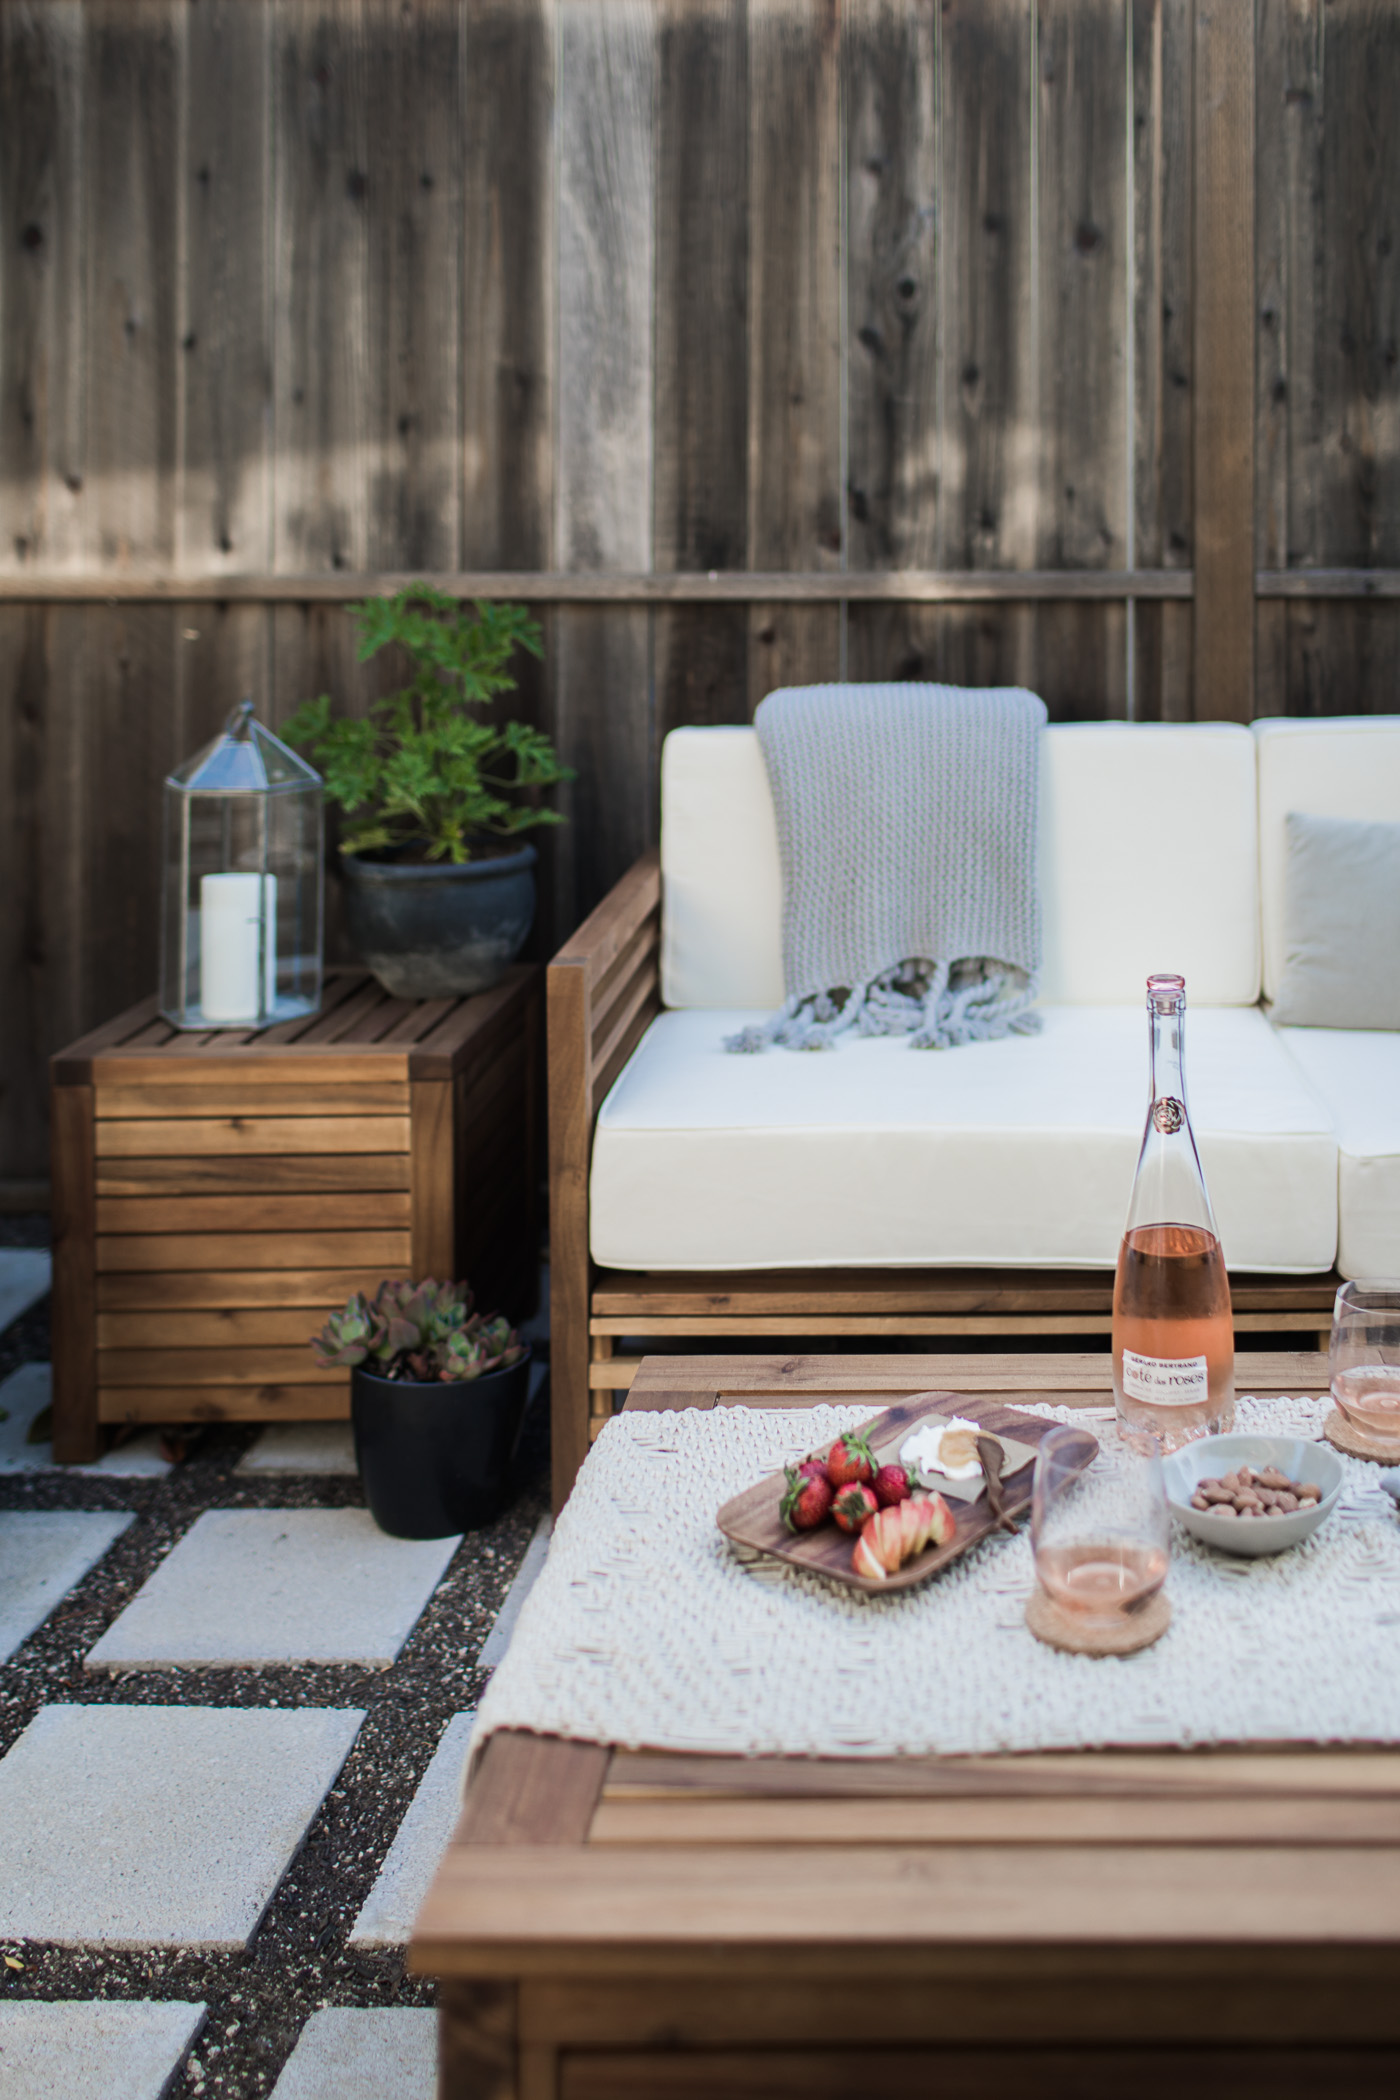 A modern-tropical California outdoor living Room.